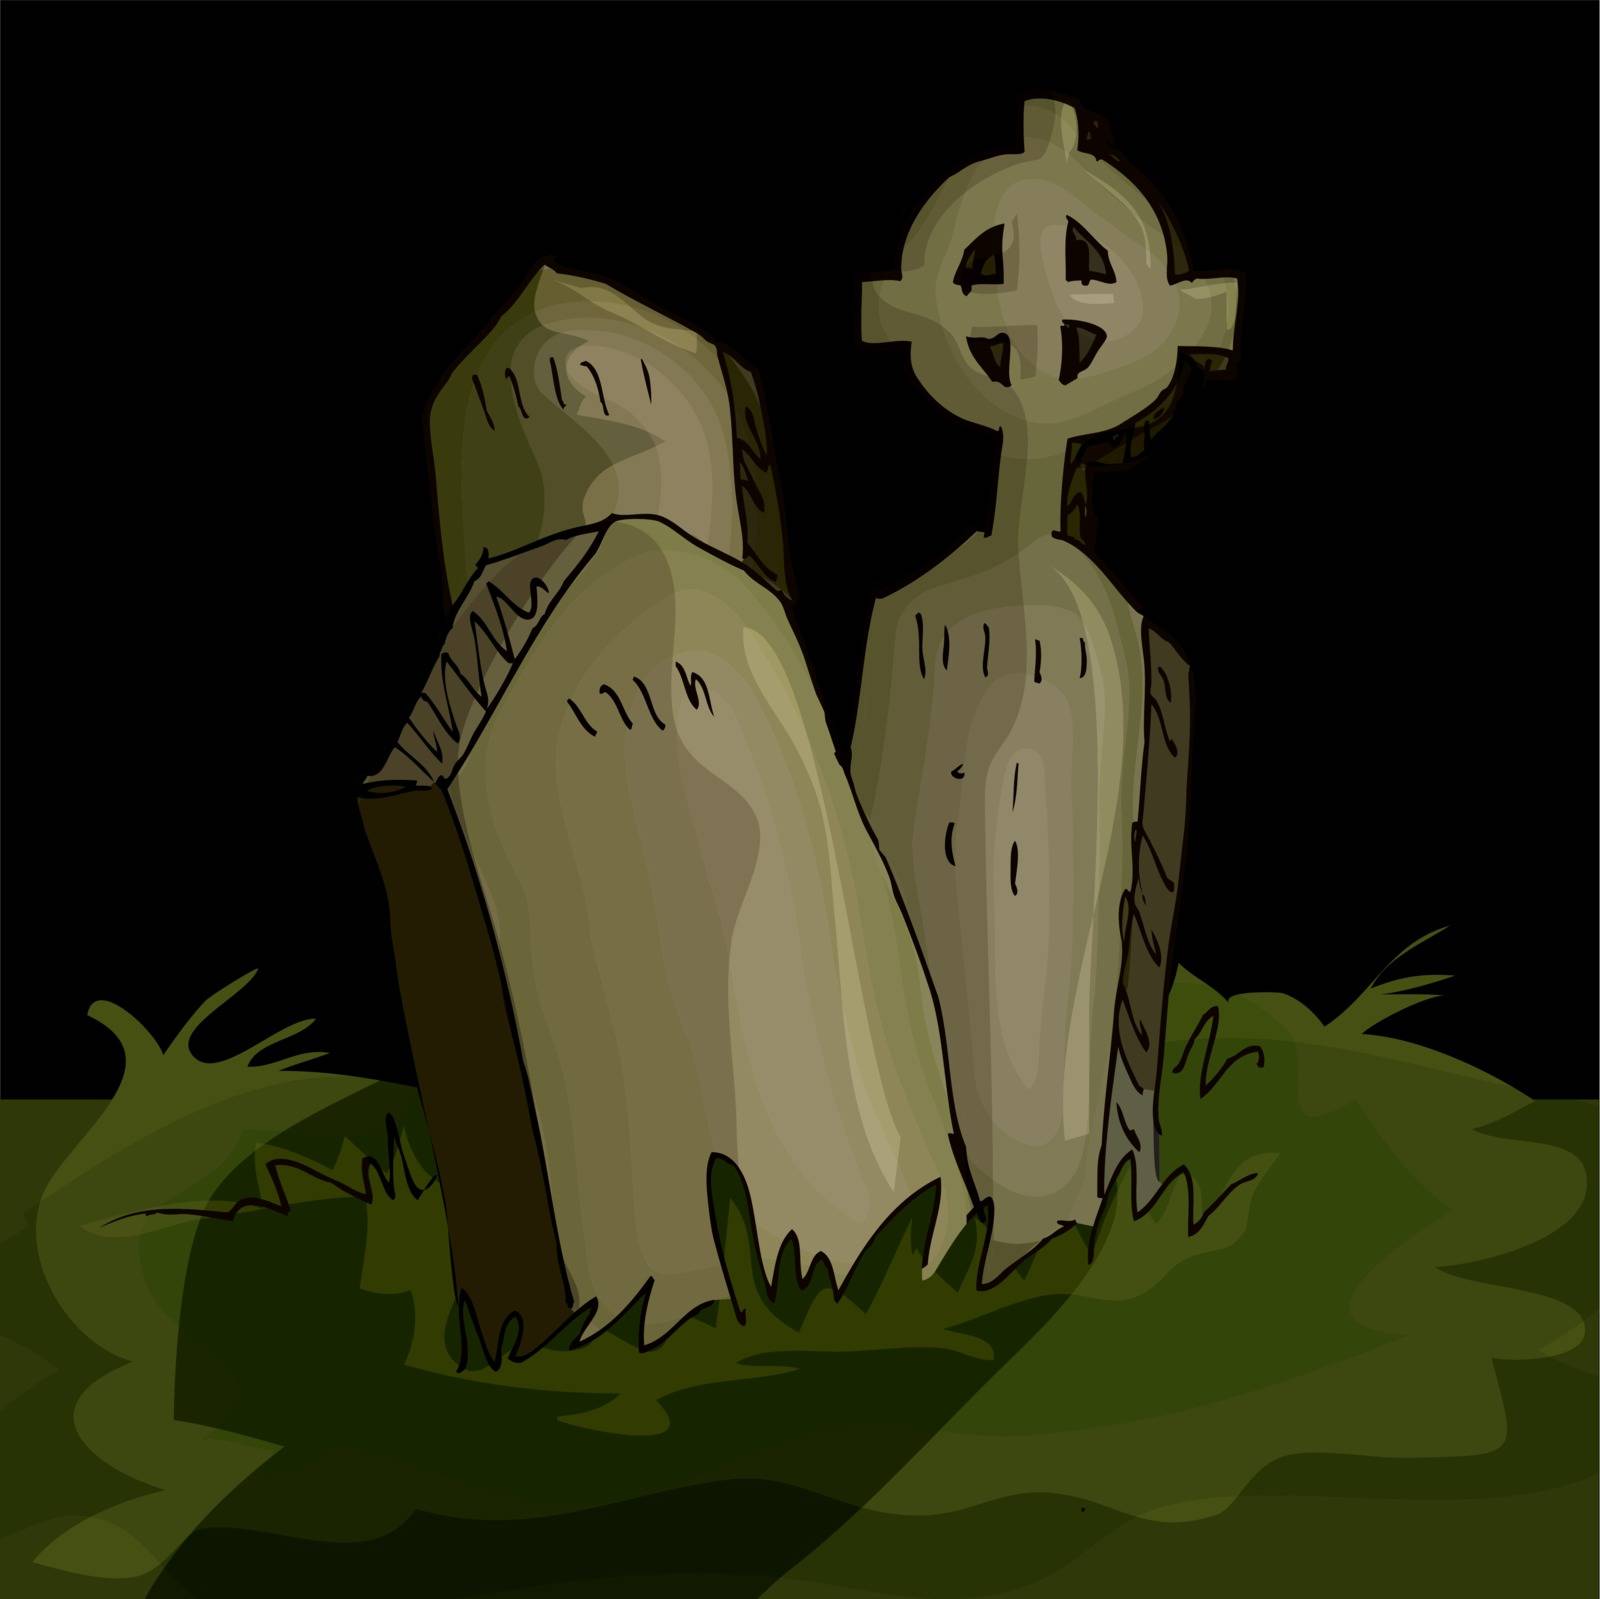 Gravestones in a graveyard by antonbrand